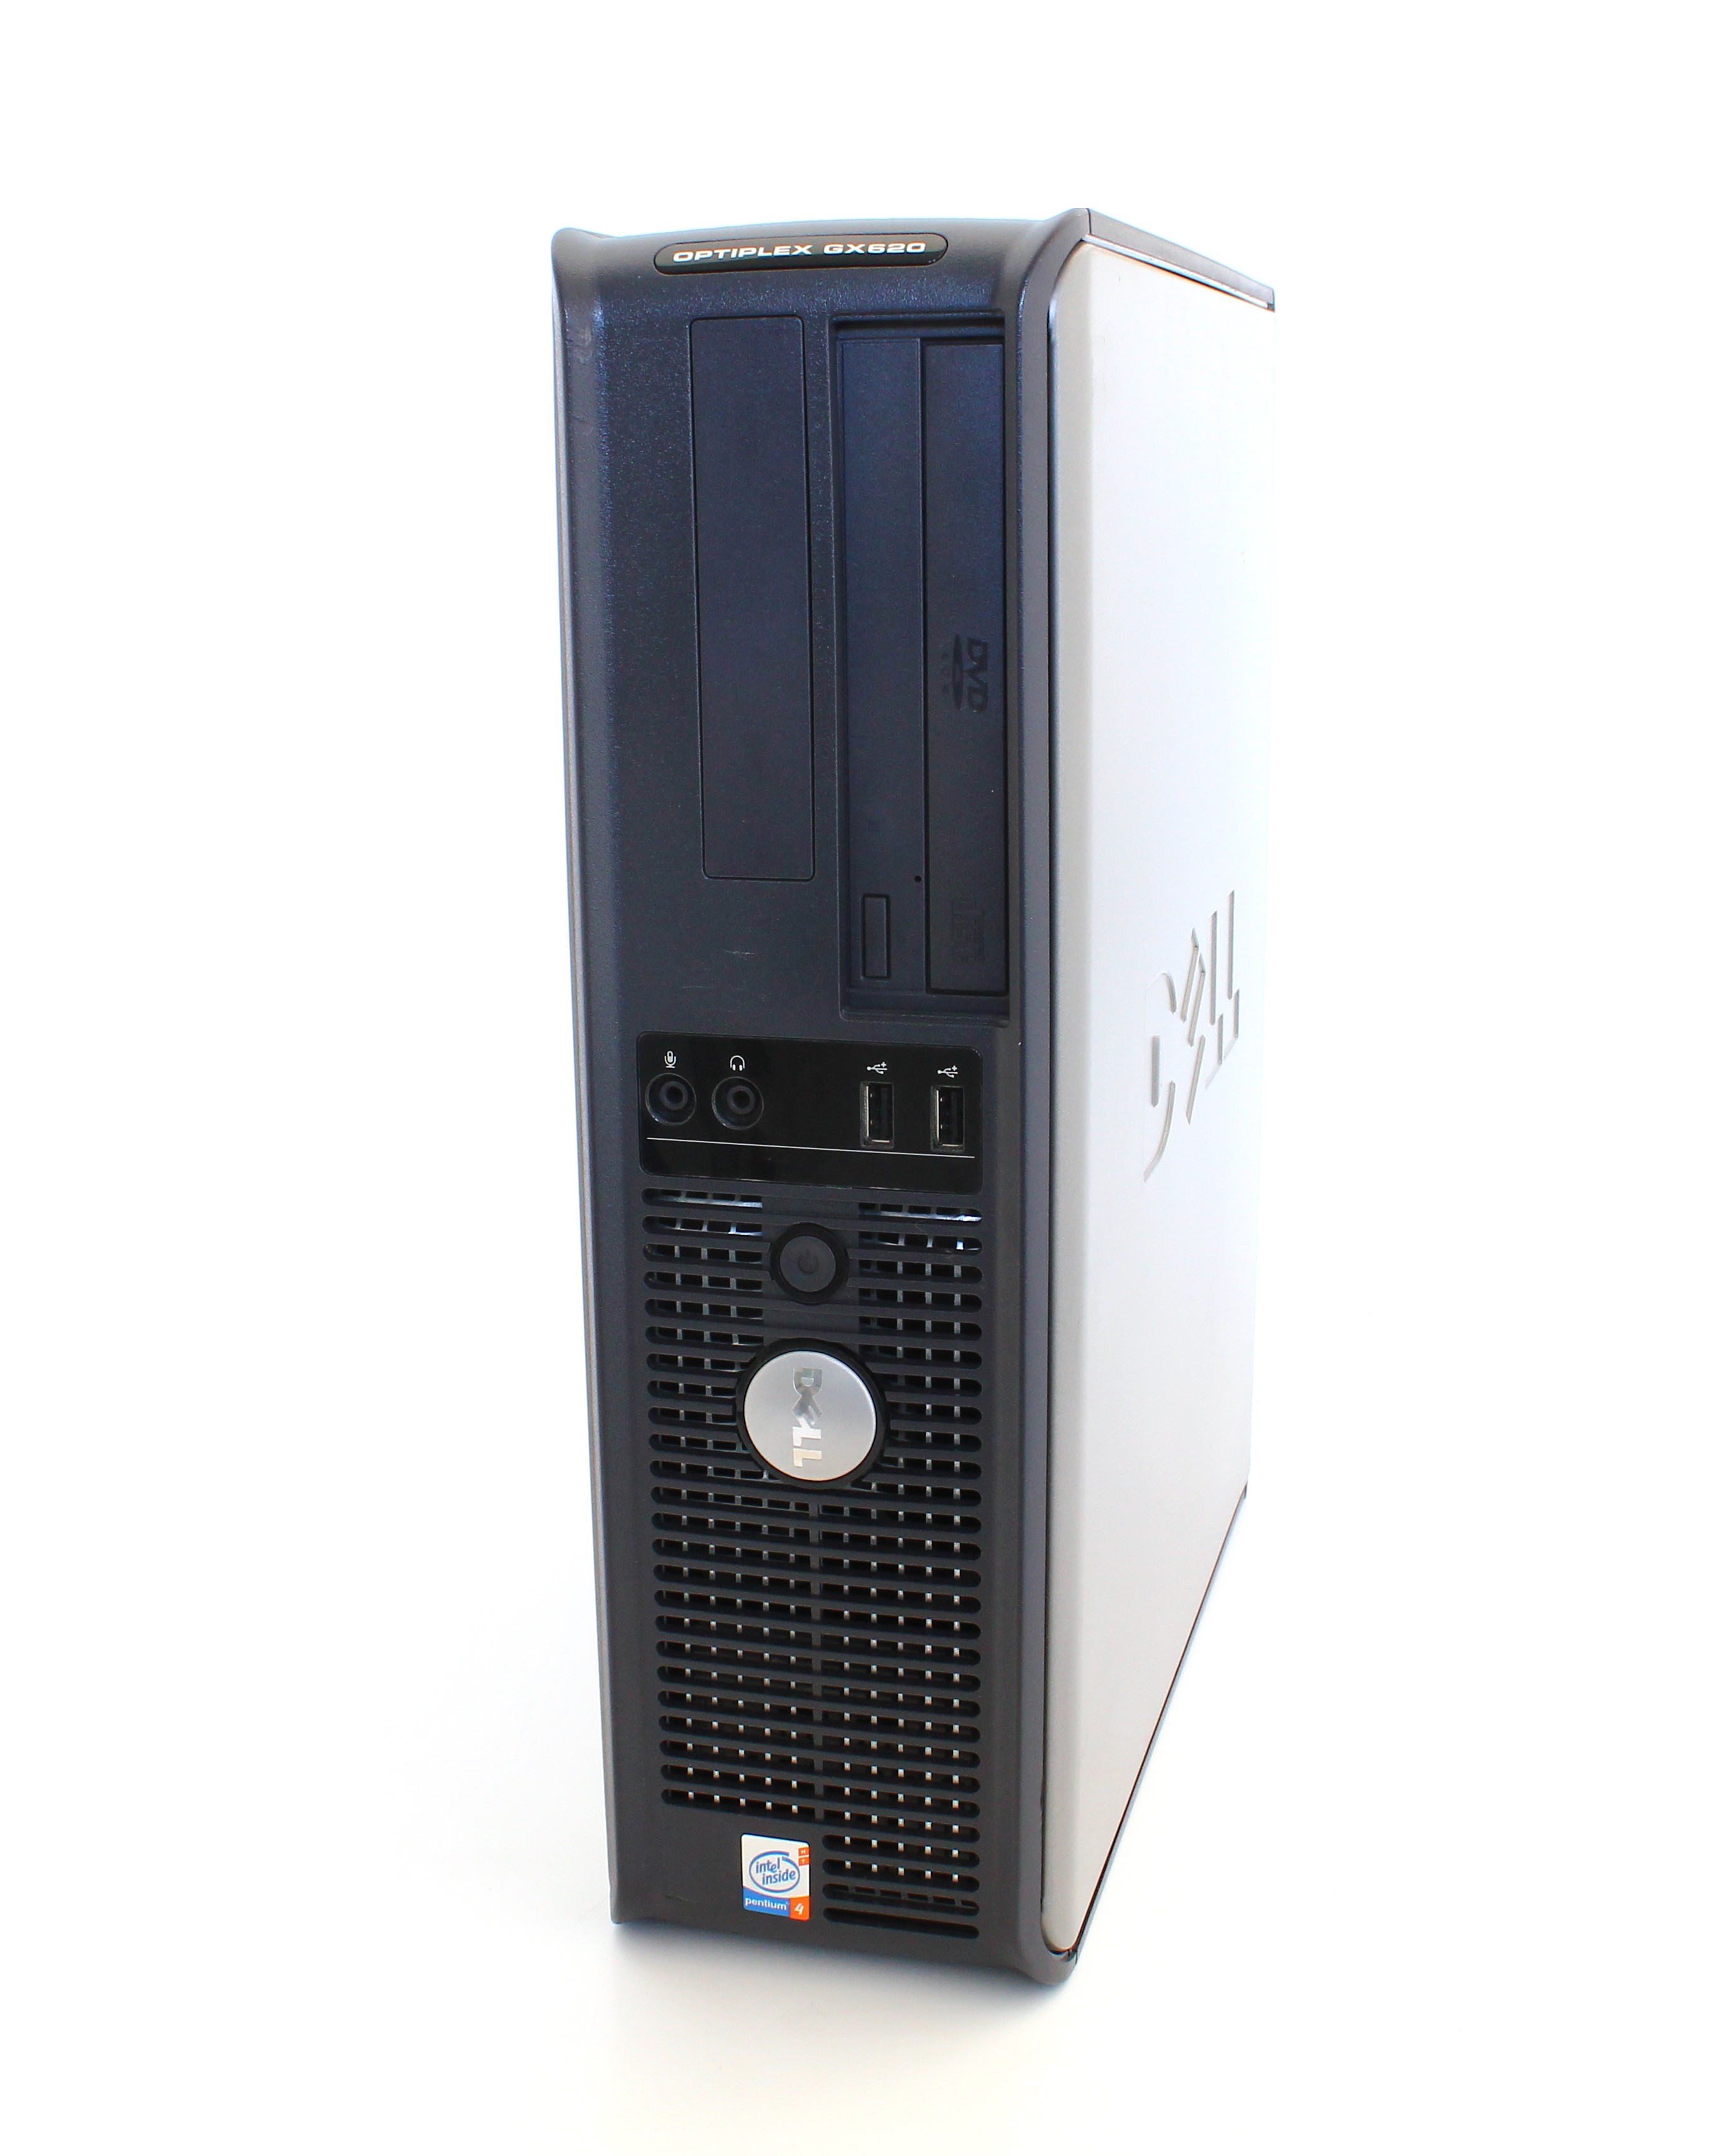 Dell Optiplex GX620 Small Form Factor Desktop Computer, 4g, 160g, DVD, Windows 7 Professional x32